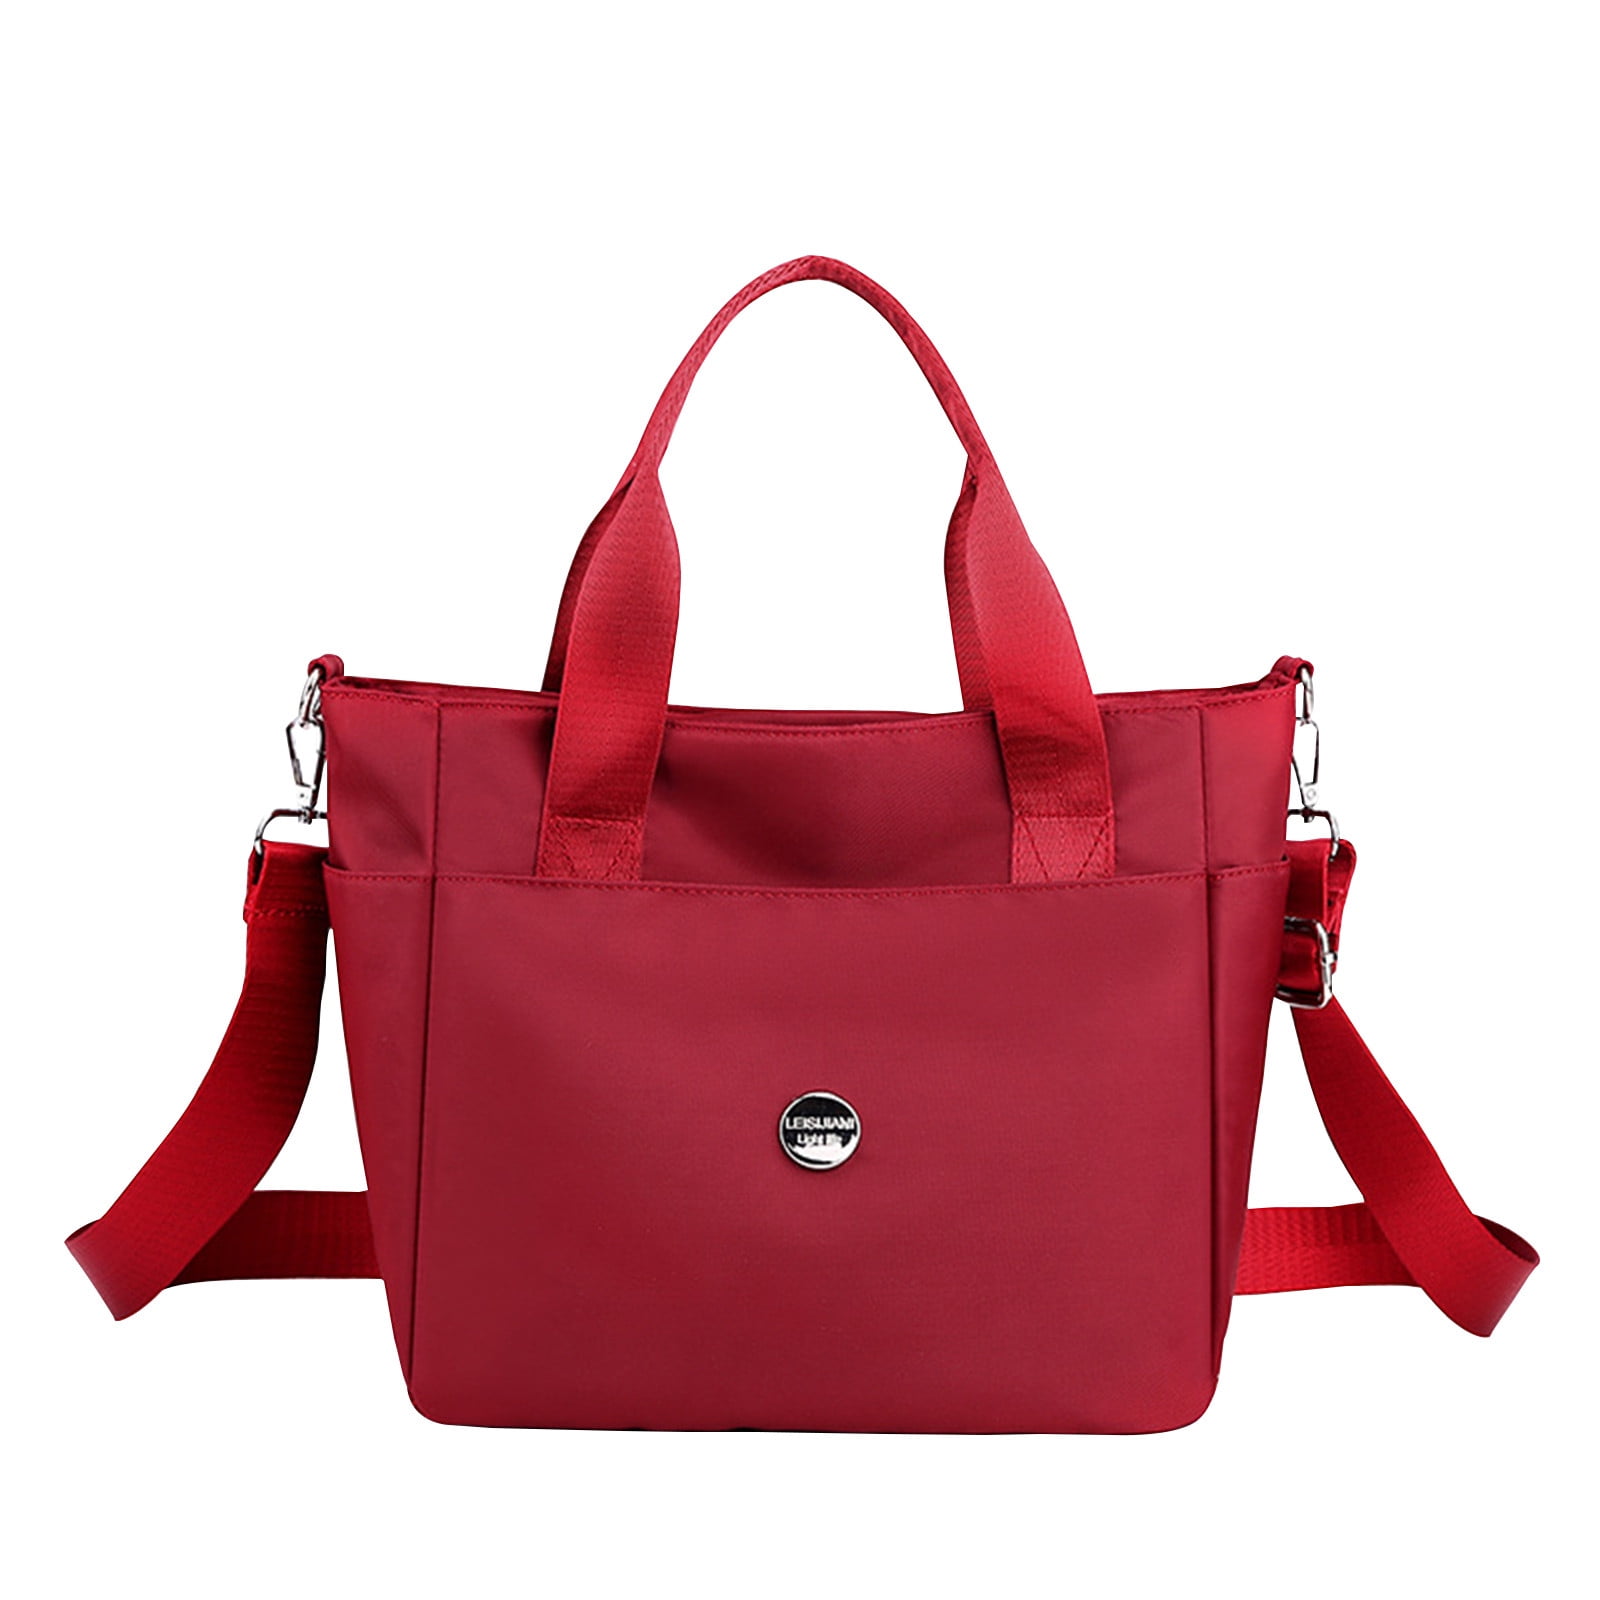 Tote Bag With Long Detachable Strap With Coin Purse, Tote Handbag, Nylon  Tote Bag, टोटे बैग - Tijore Group, Mumbai | ID: 2850260762273